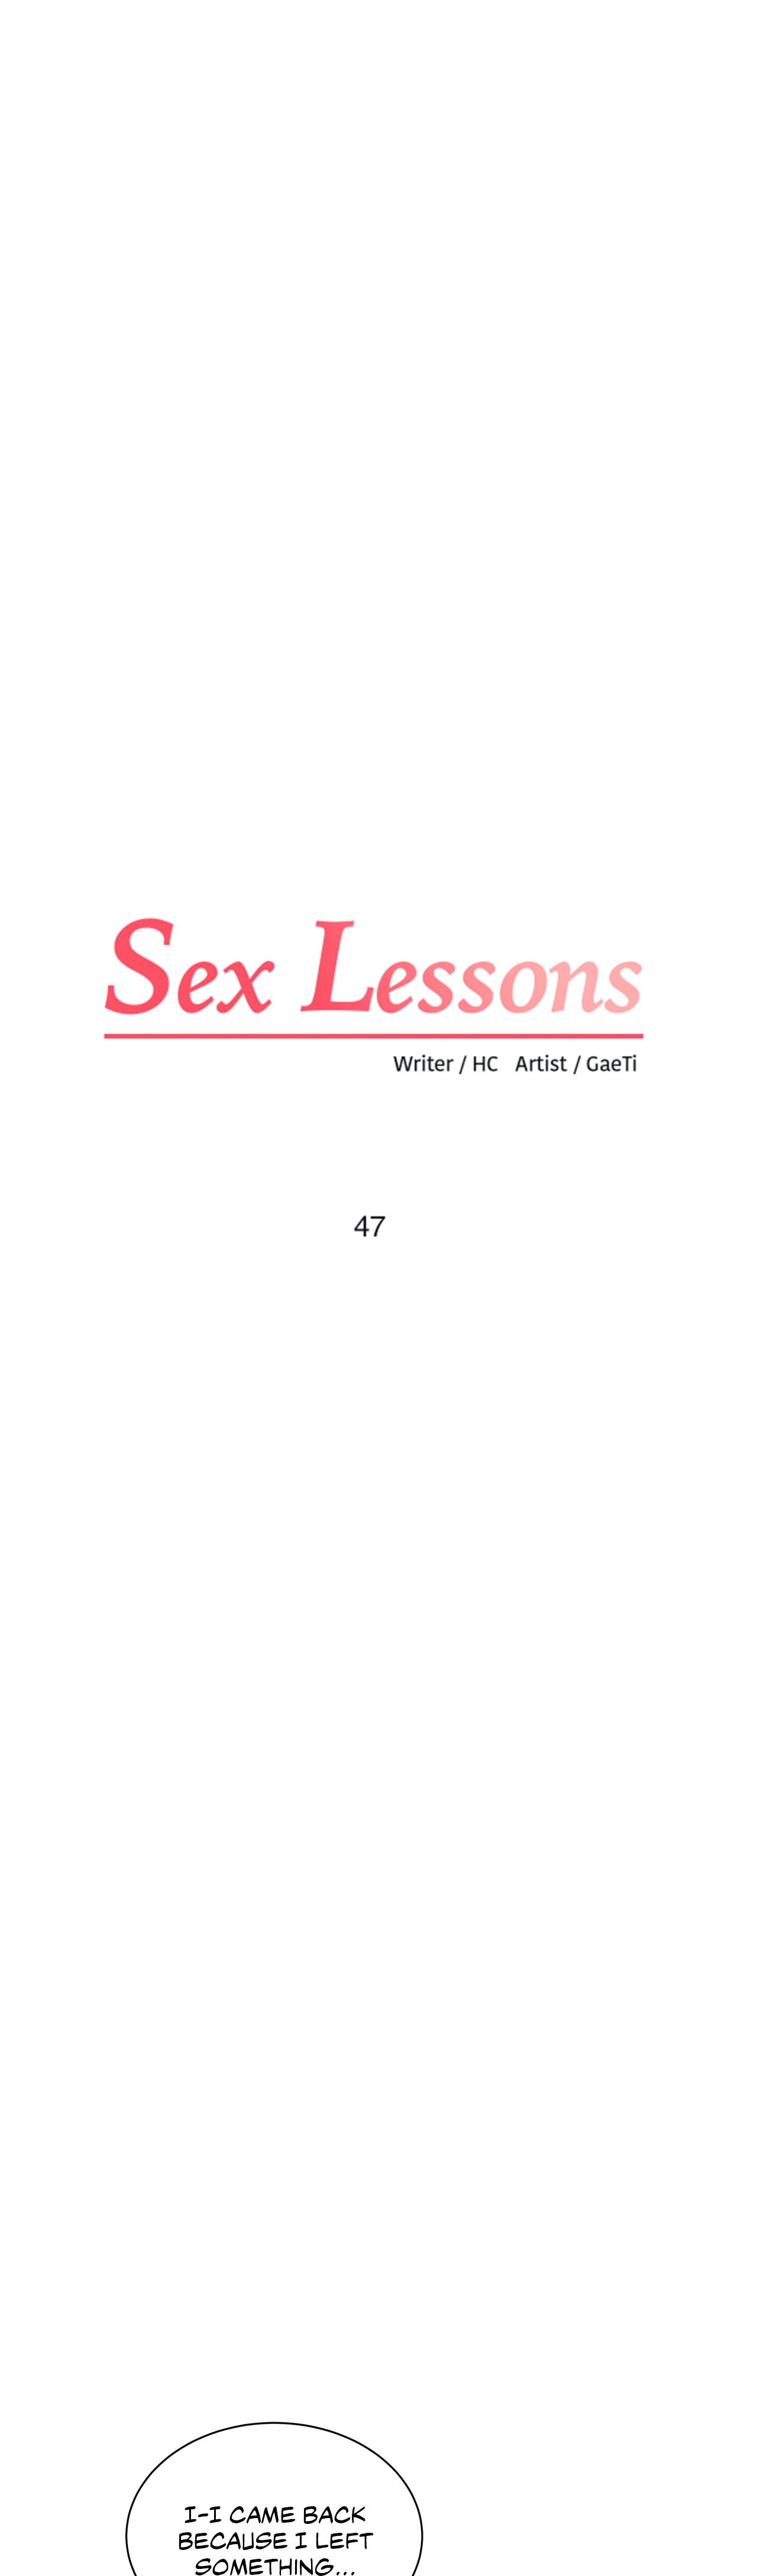 Sex Lessons image